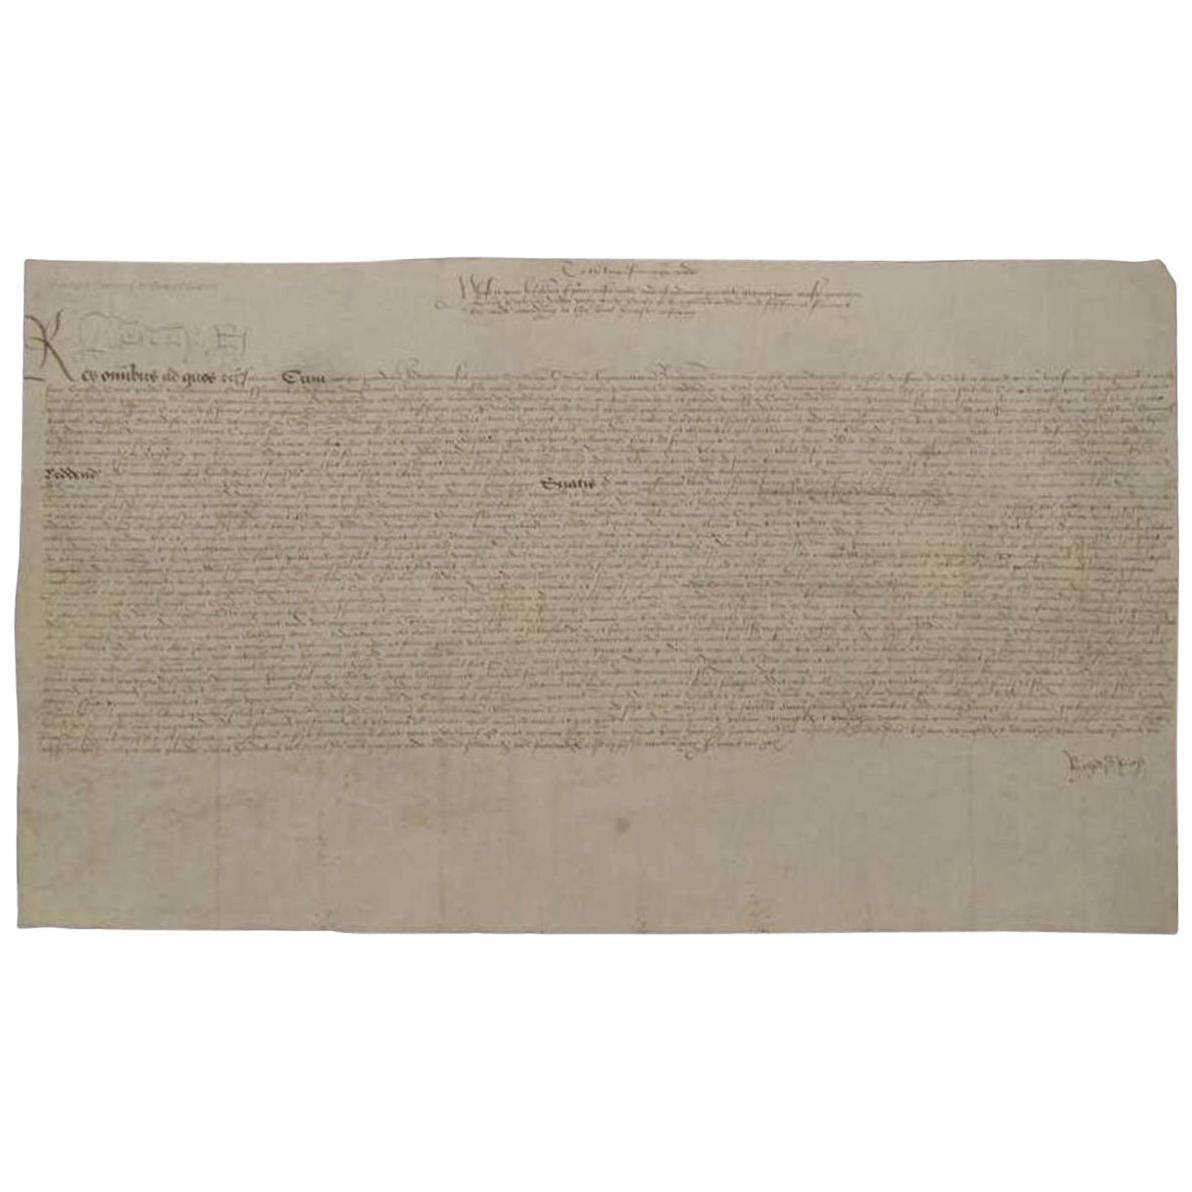 King Henry VIII Genuine Original 16th Century Signed Petition on Vellum, White